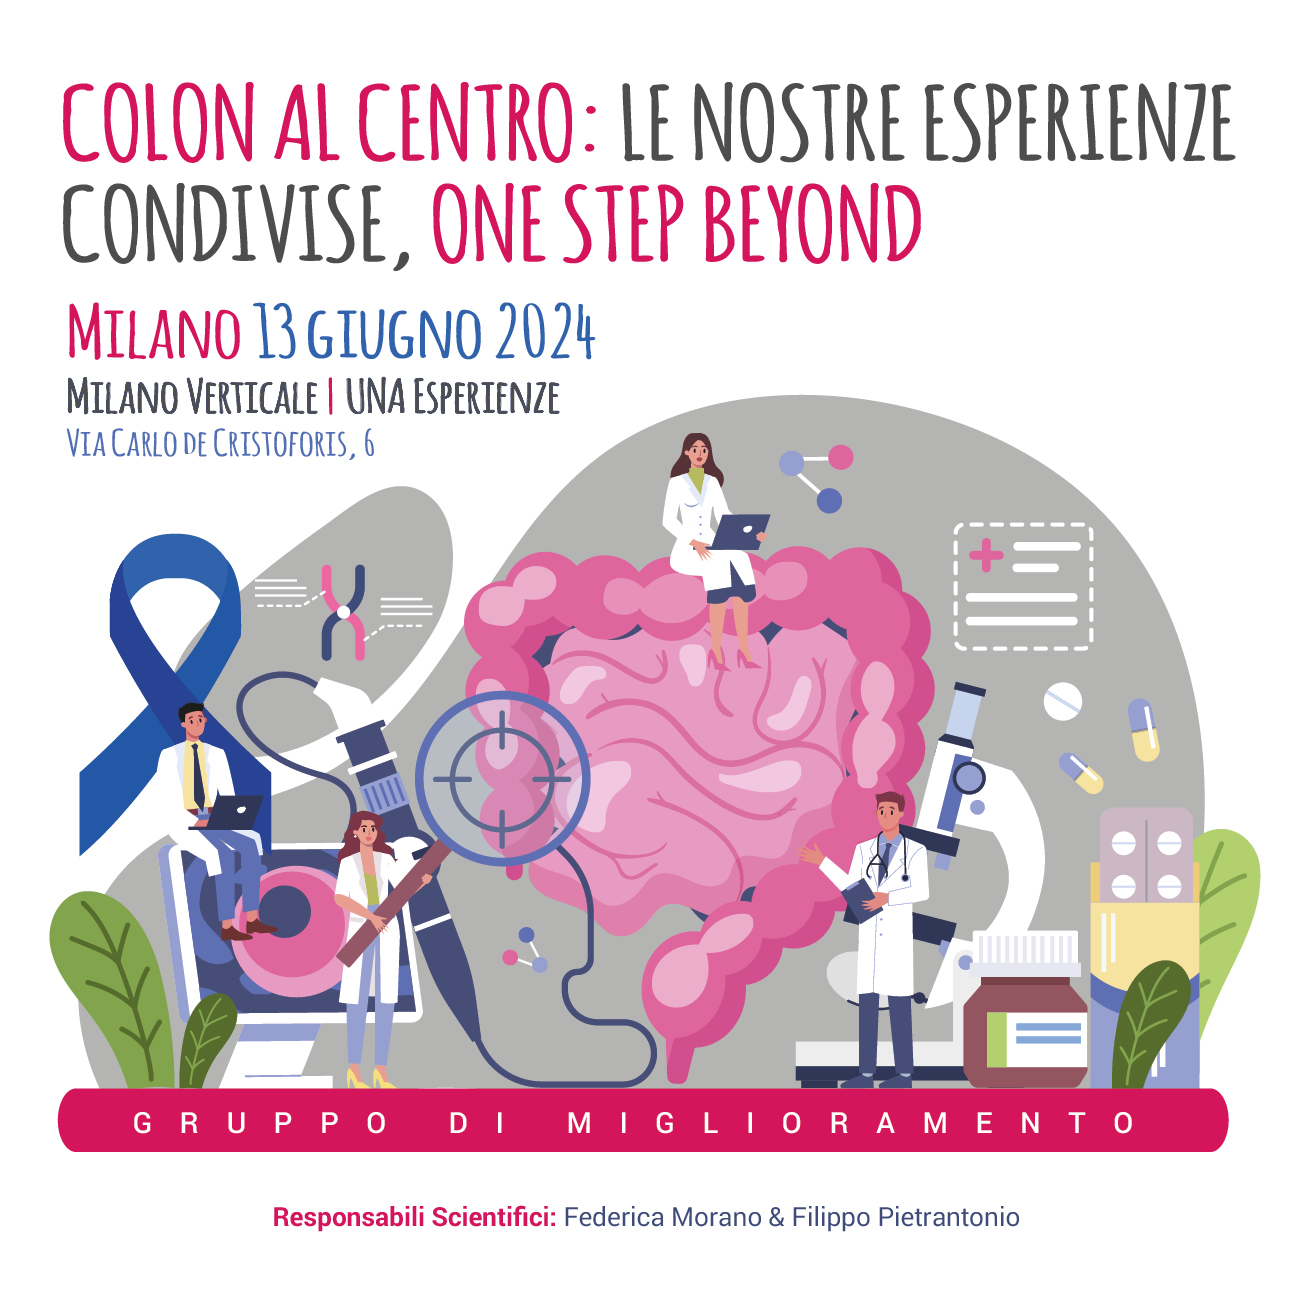 COLON AL CENTRO: LE NOSTRE ESPERIENZE CONDIVISE, ONE STEP BEYOND 